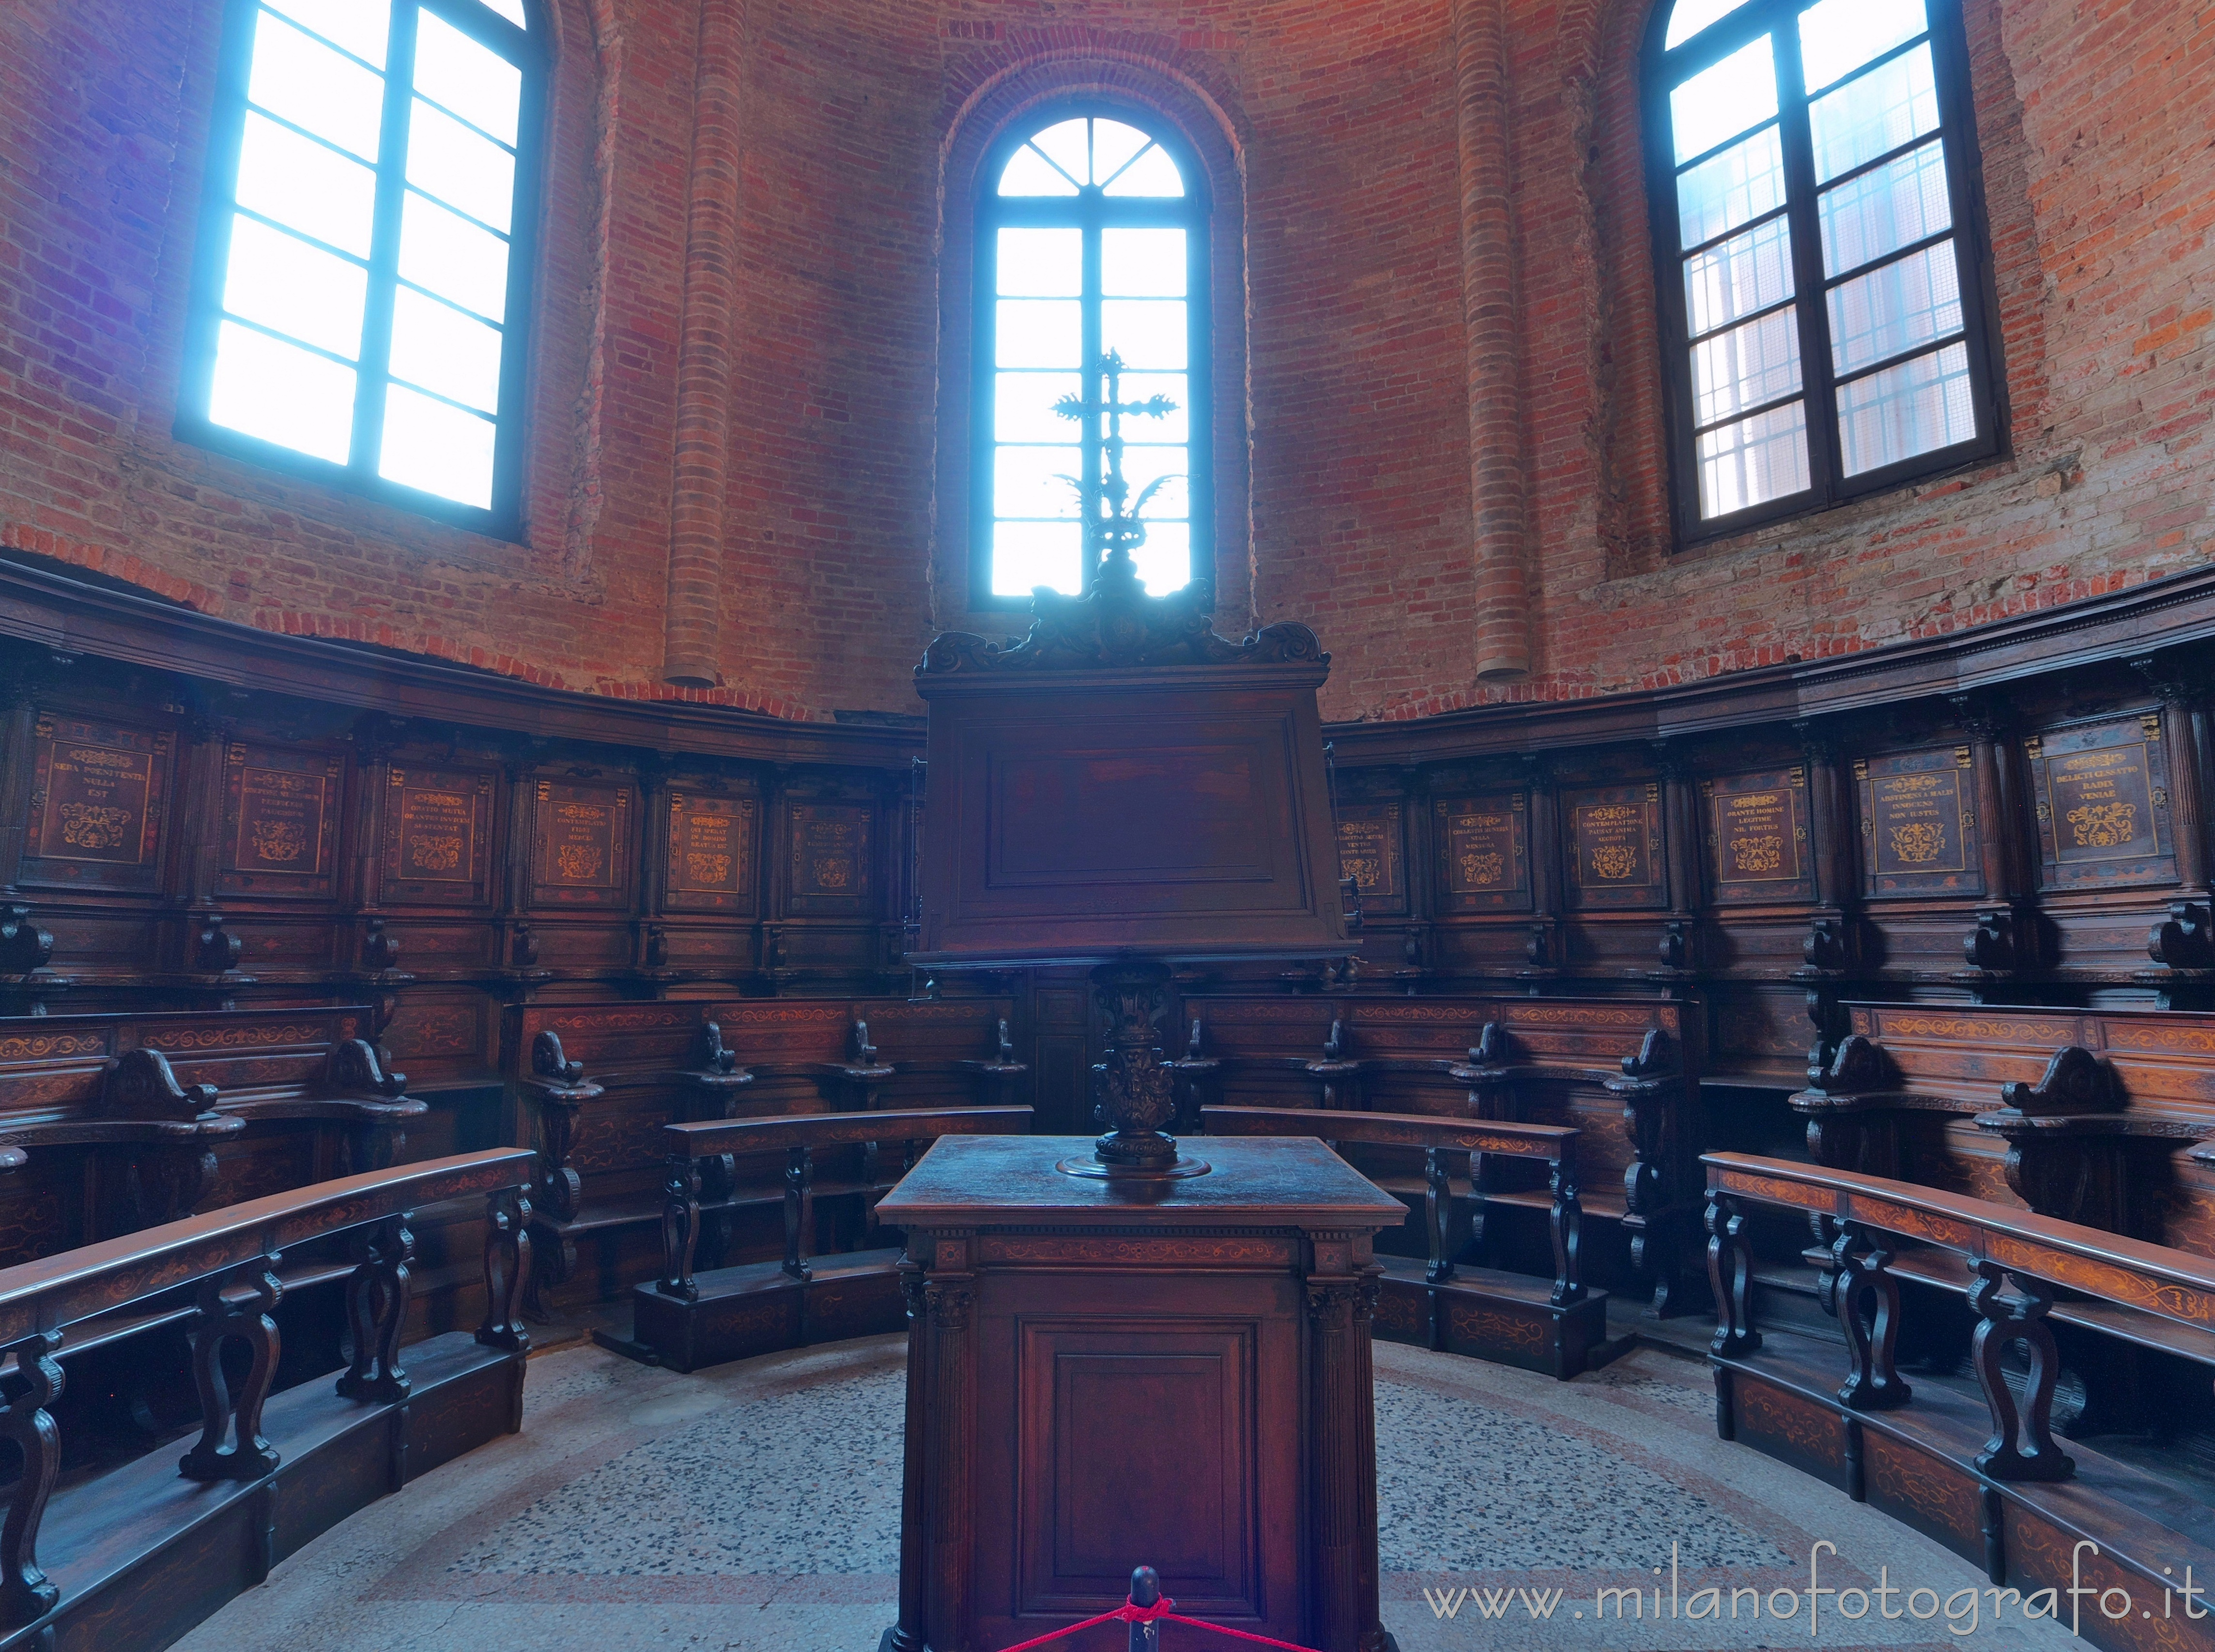 Milan (Italy): Choir in the apse of the Basilica of San Simpliciano - Milan (Italy)